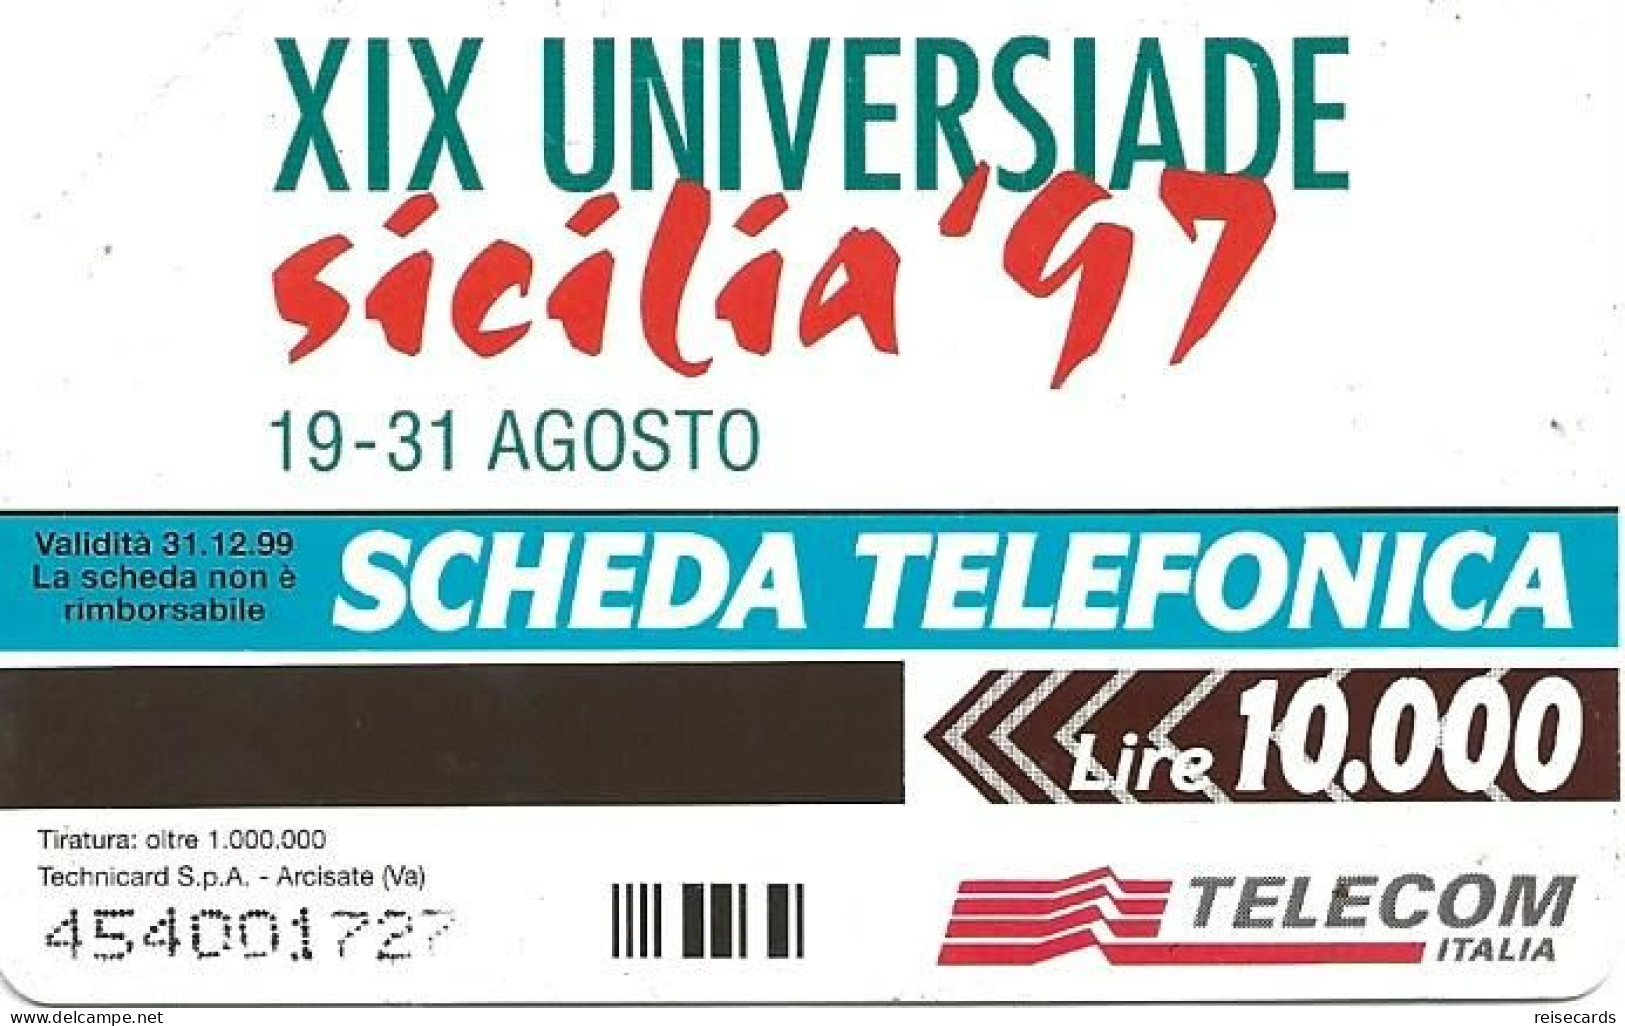 Italy: Telecom Italia - XIX Universiade Sicilia '97, Archimede - Publiques Publicitaires